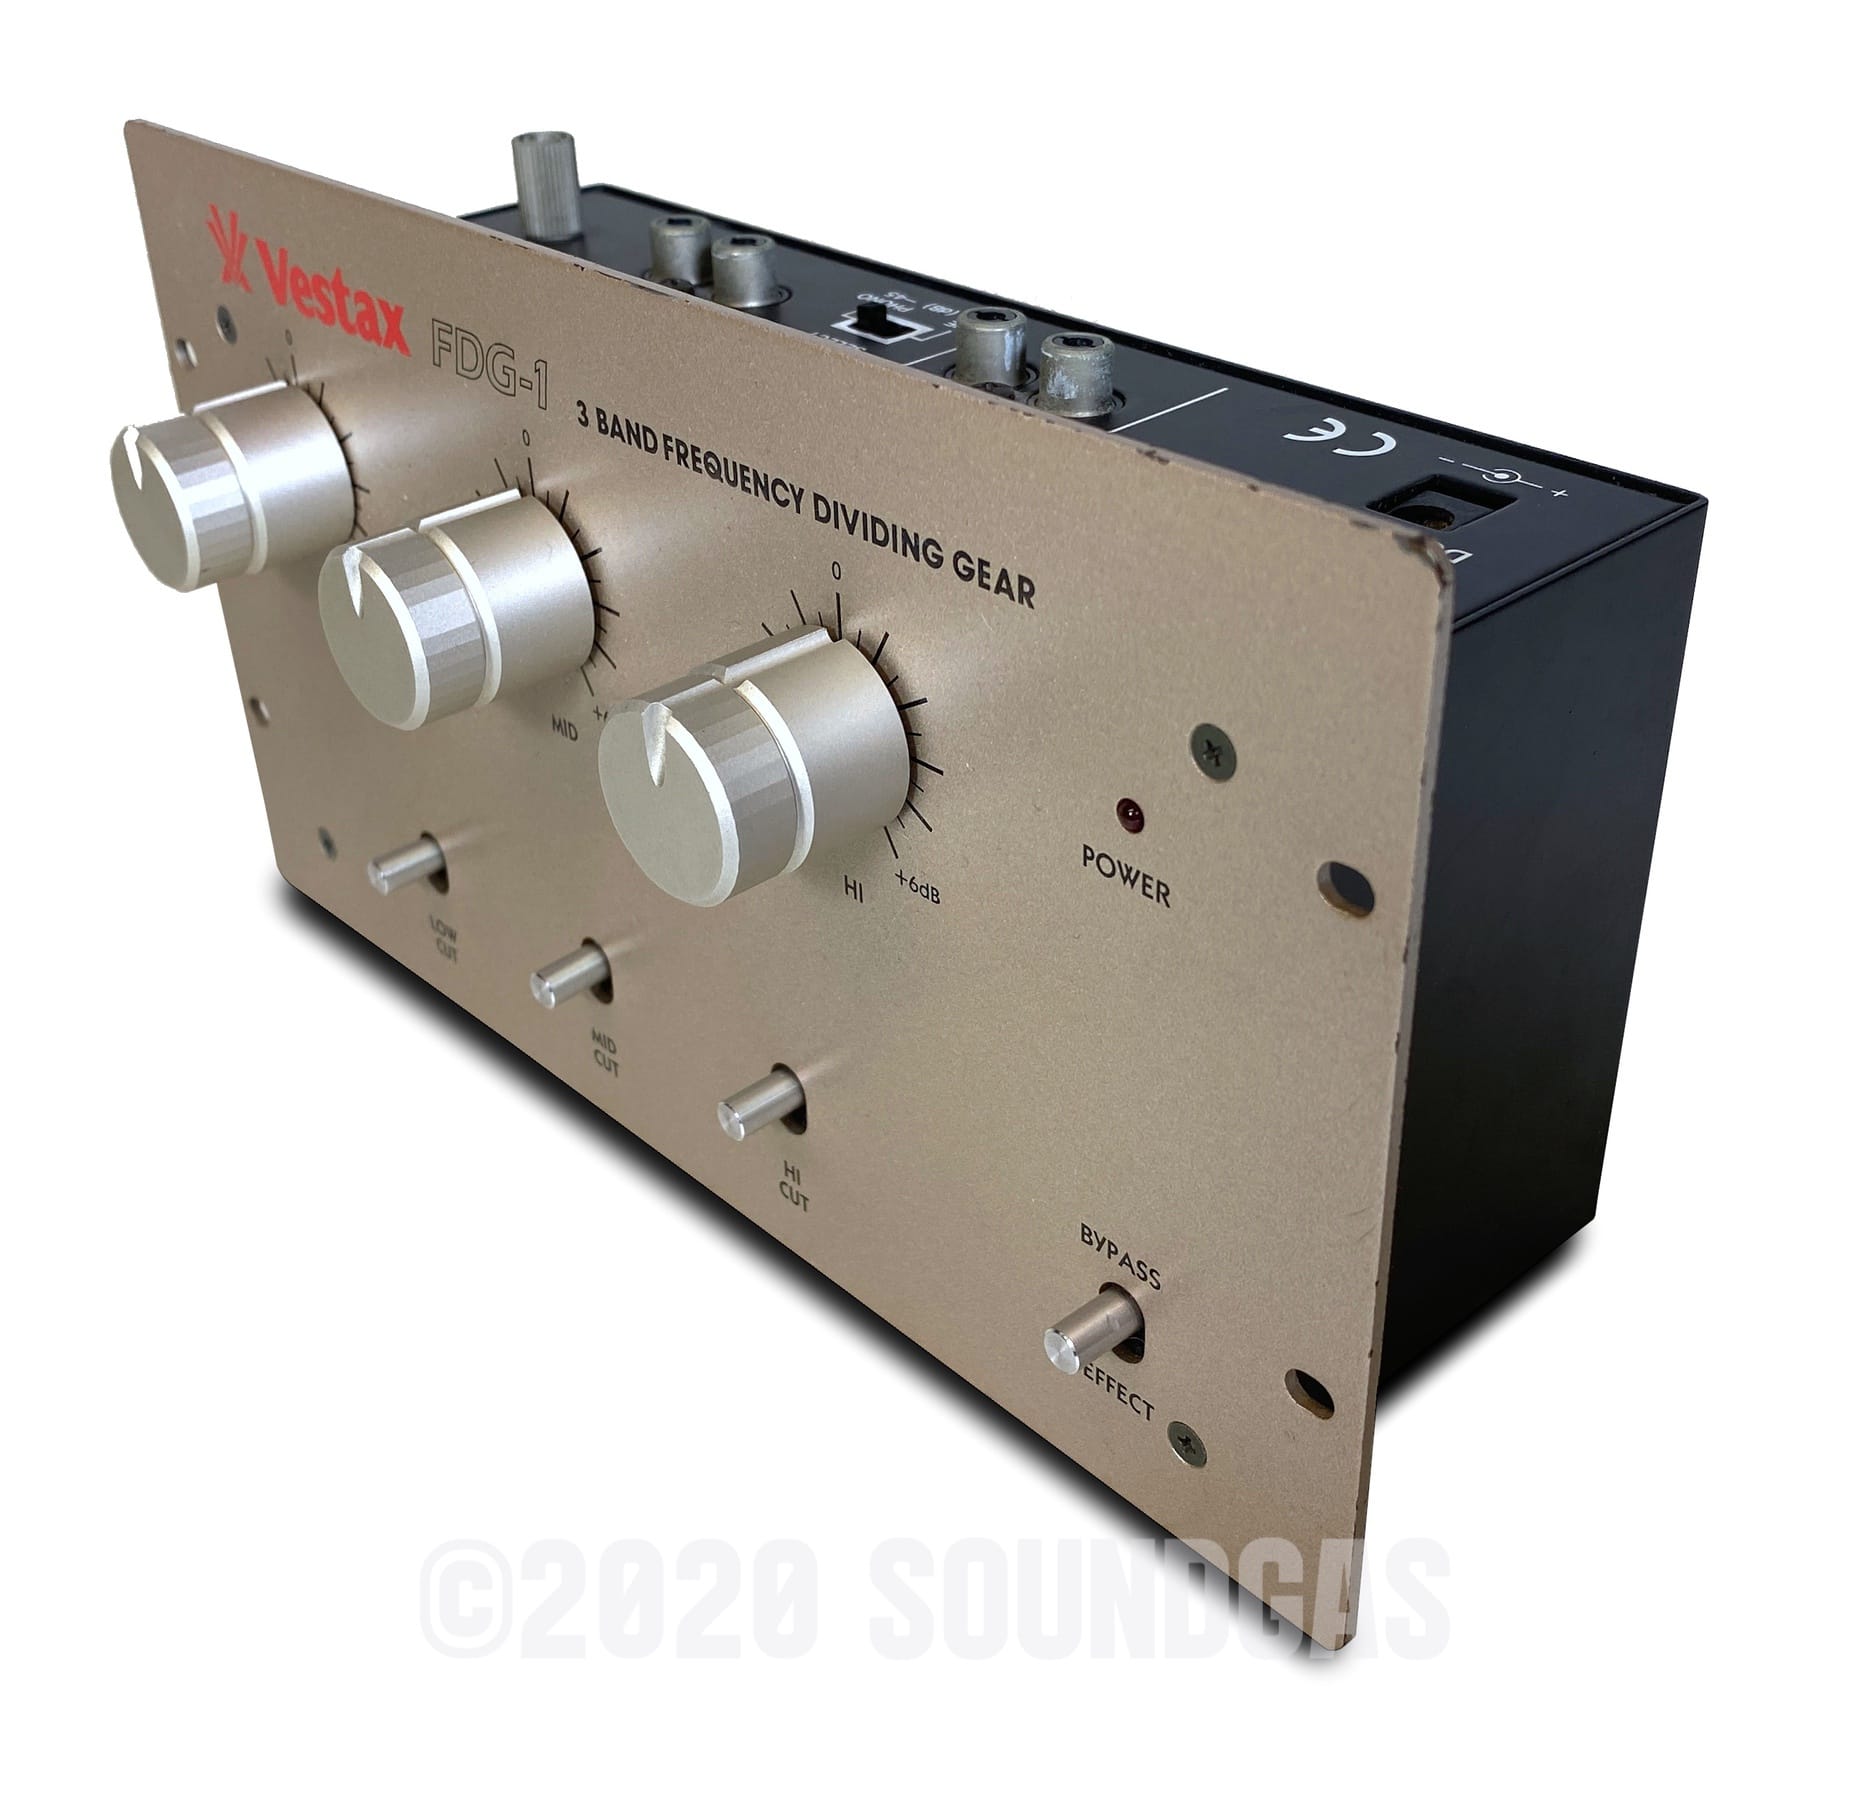 Vestax FDG-1 Frequency Dividing Gear FOR SALE - Soundgas